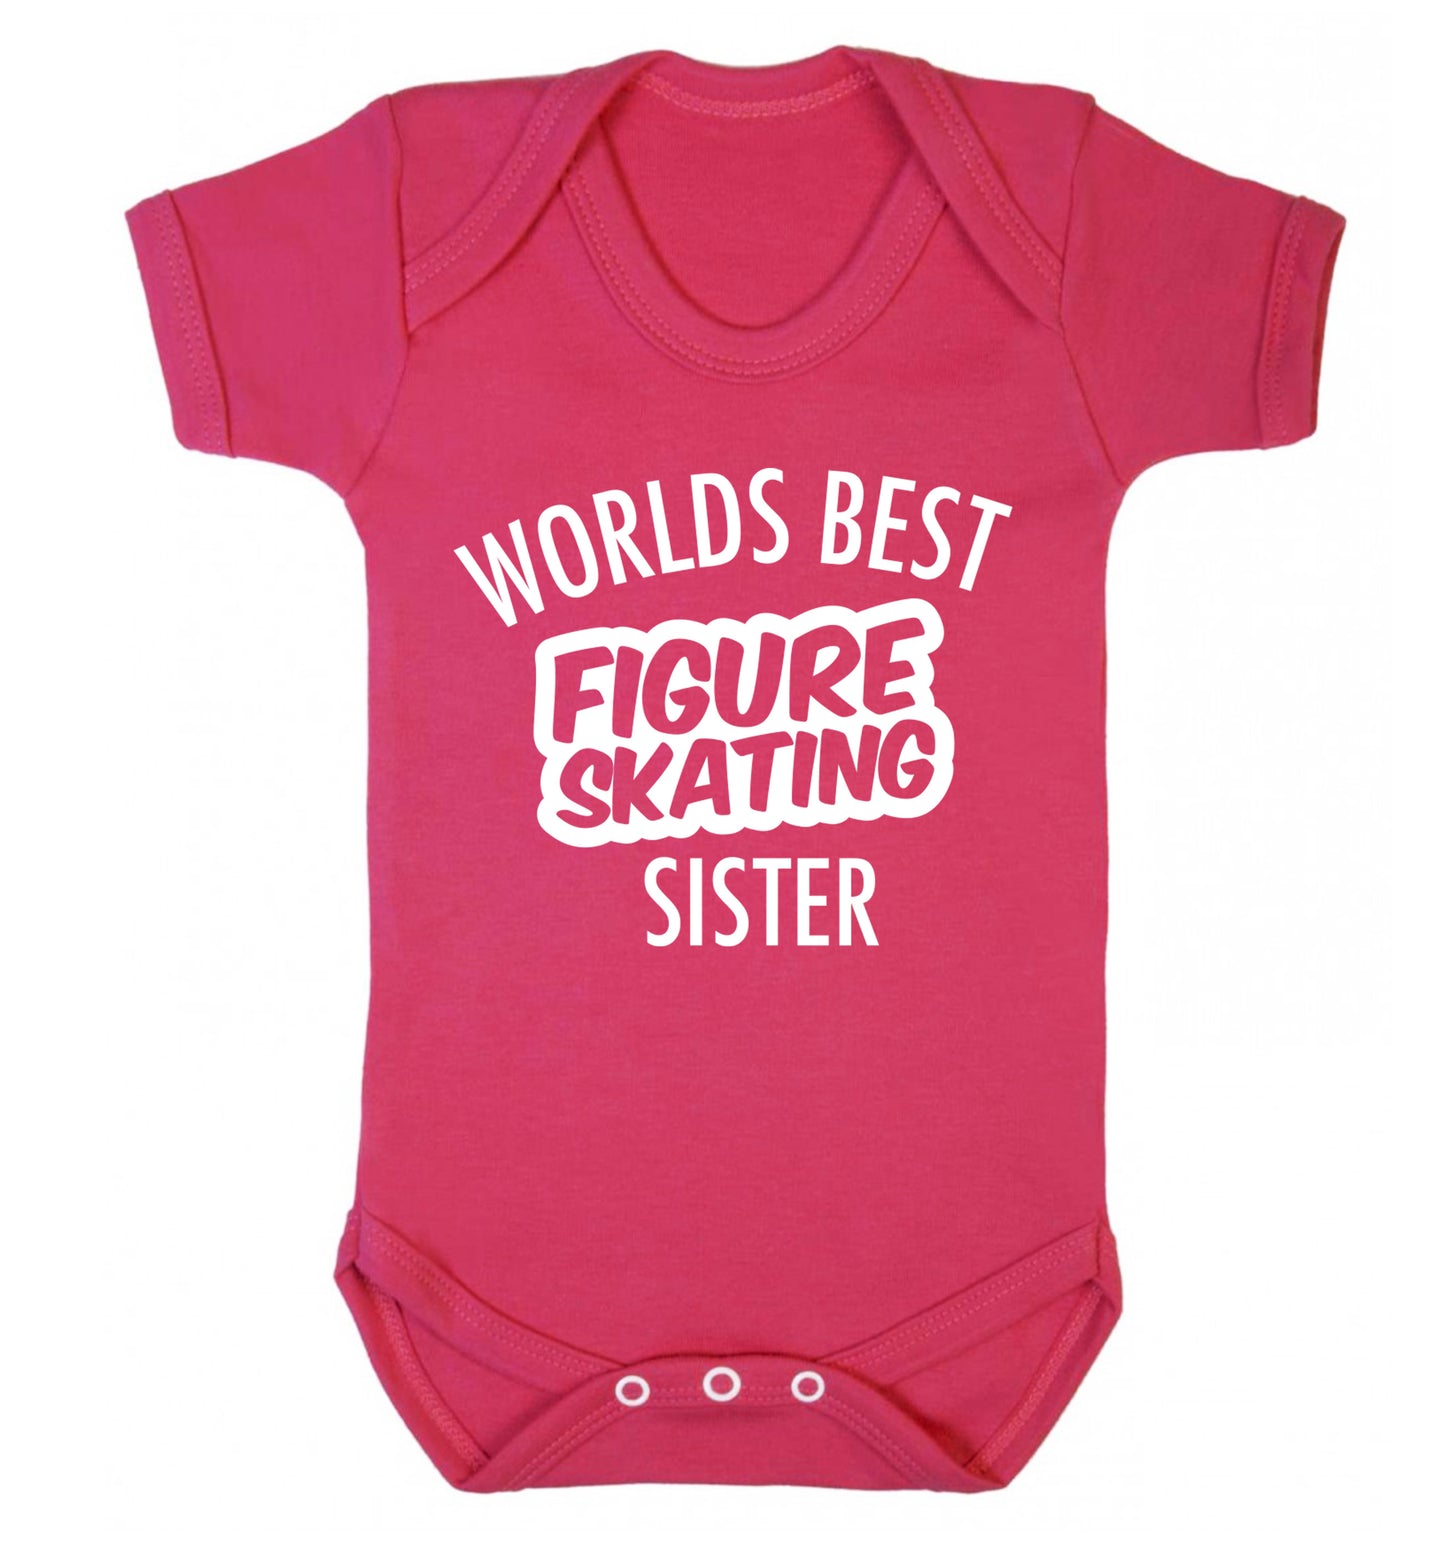 Worlds best figure skating sisterBaby Vest dark pink 18-24 months